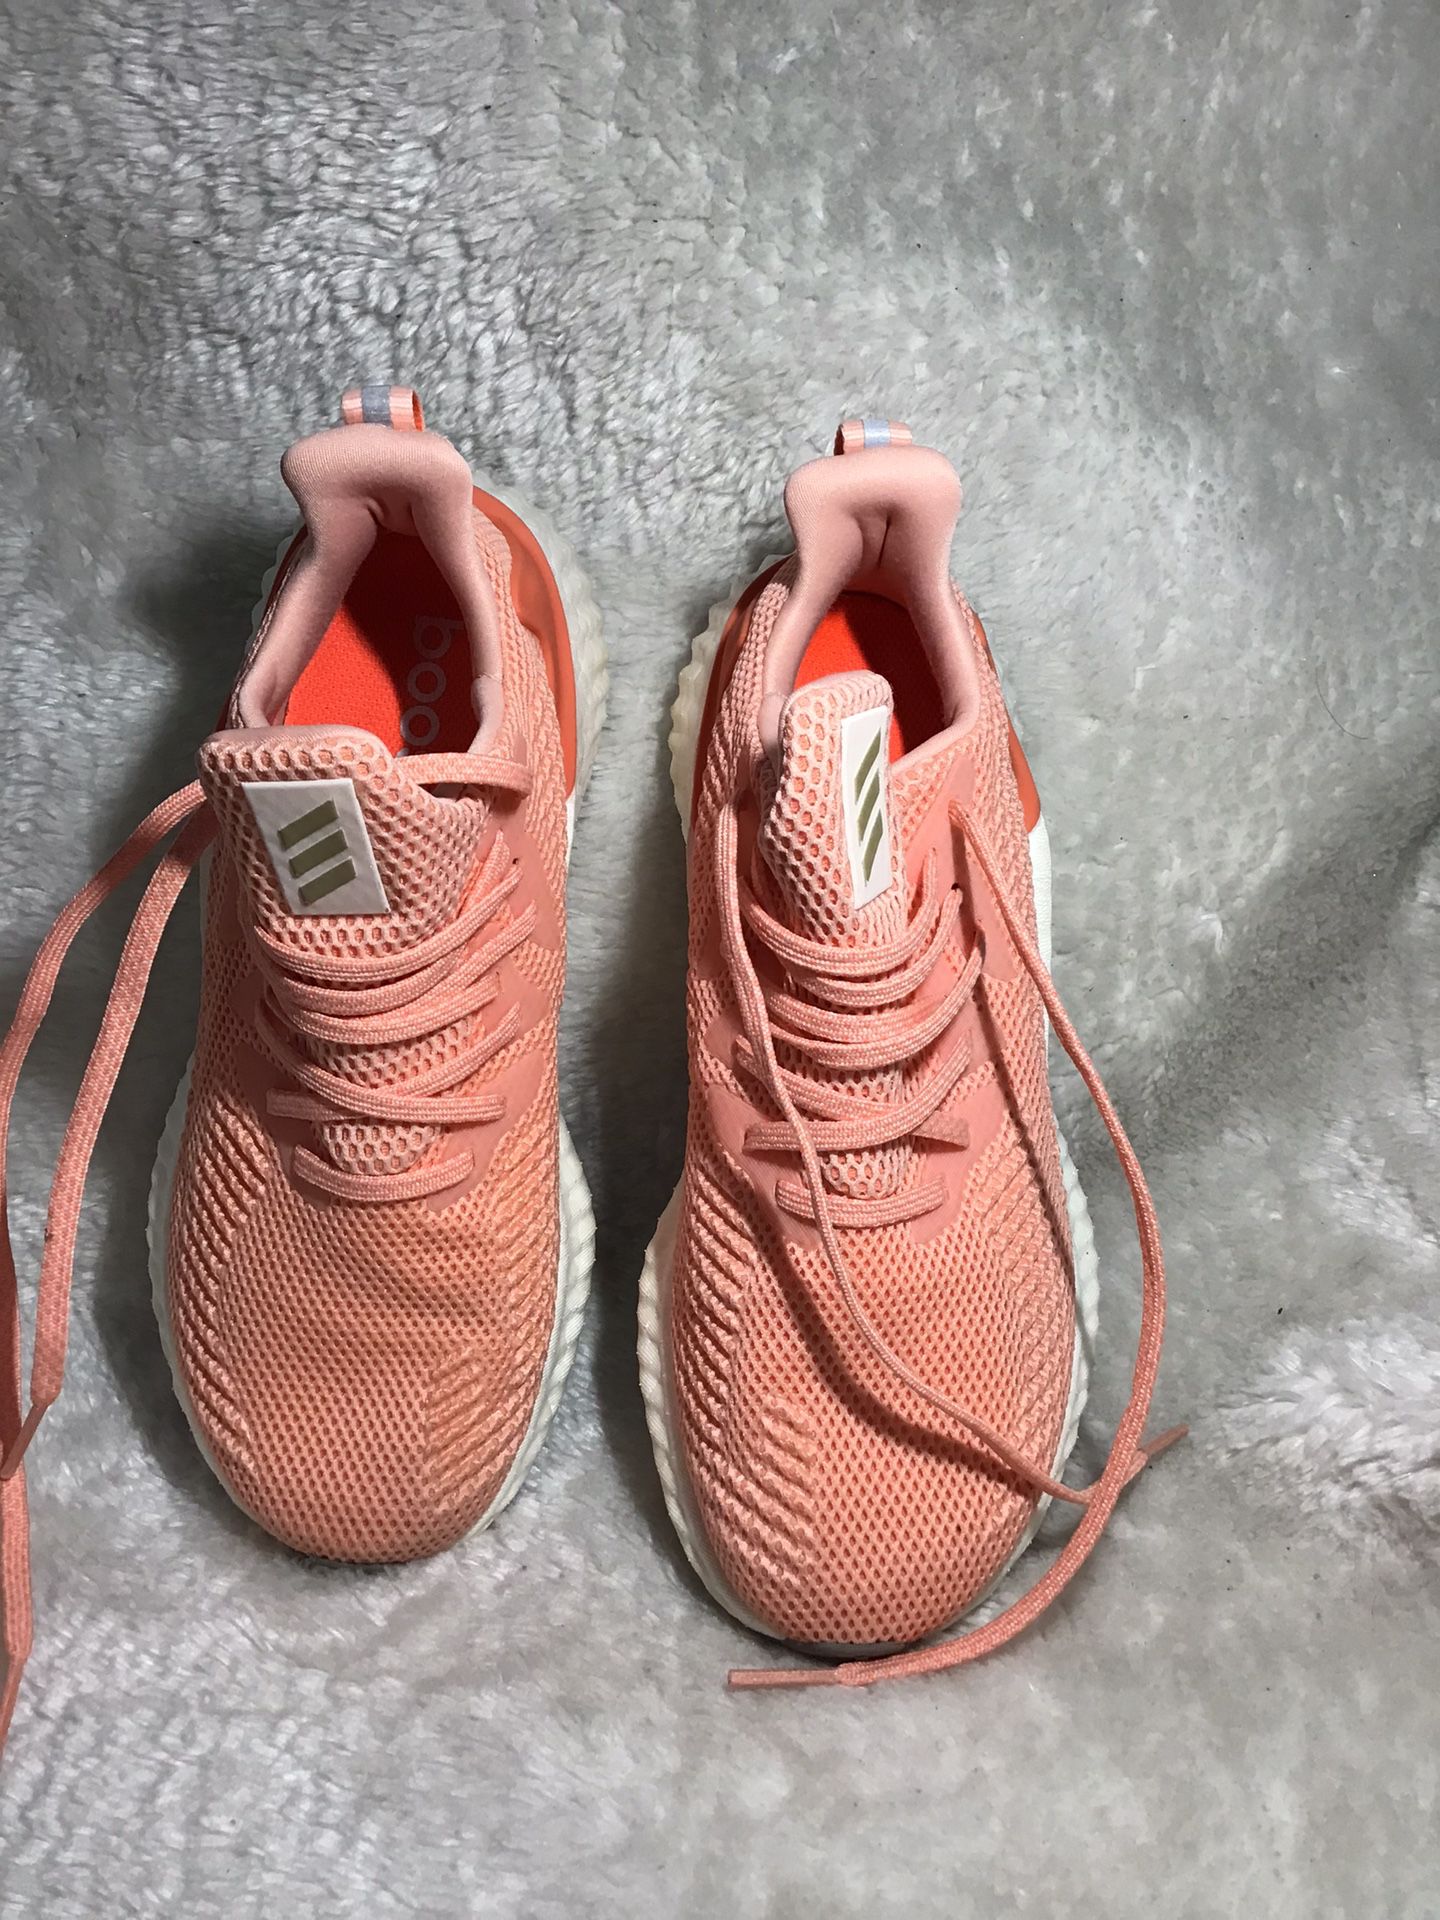 Adidas Alpha Boost glow Light Coral Running Shoes Men’s 7/women’s 9